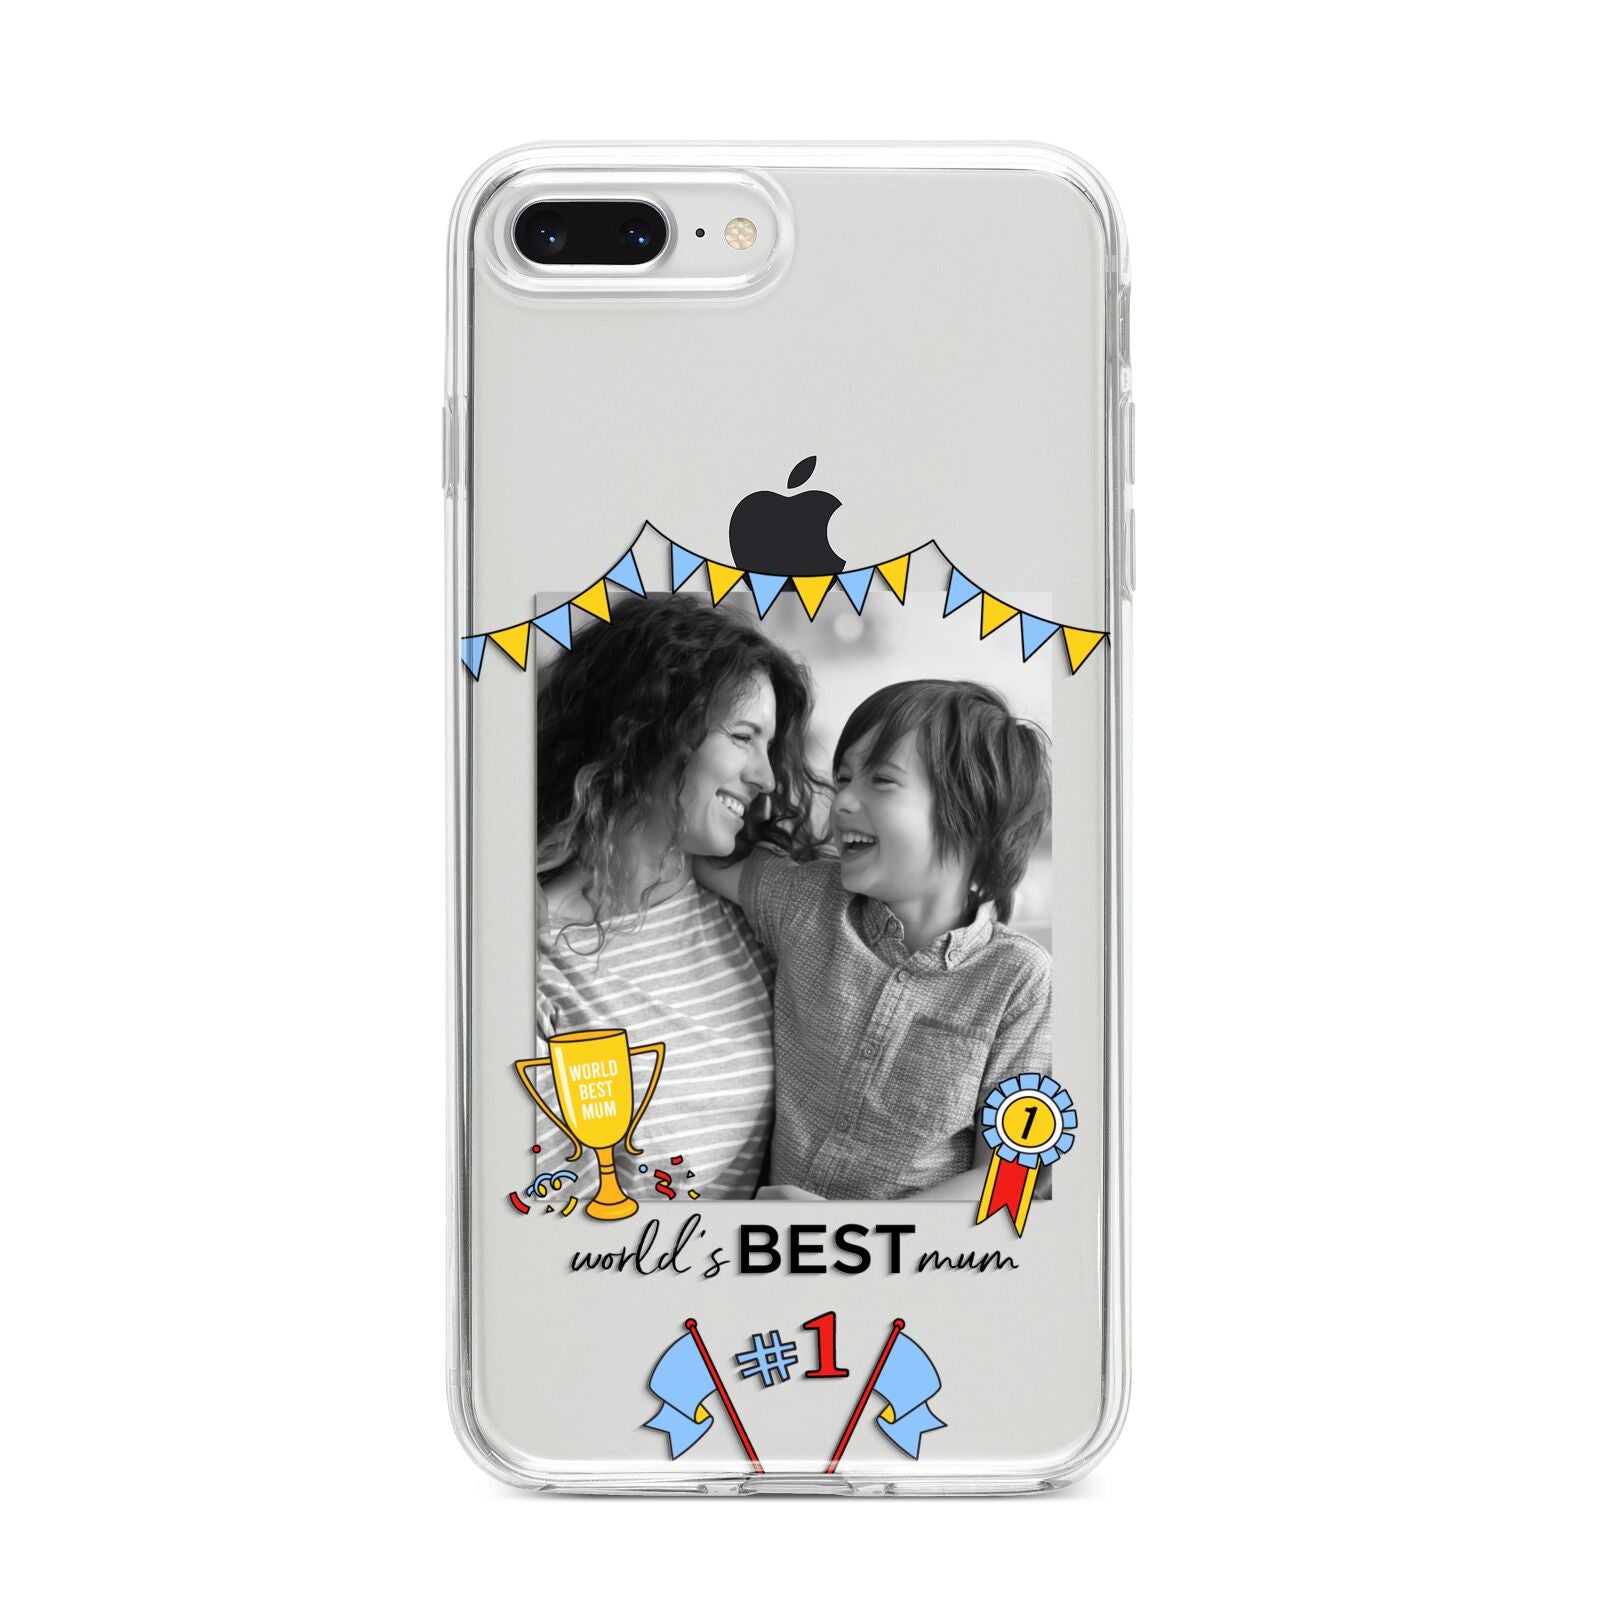 Worlds Best Mum iPhone 8 Plus Bumper Case on Silver iPhone